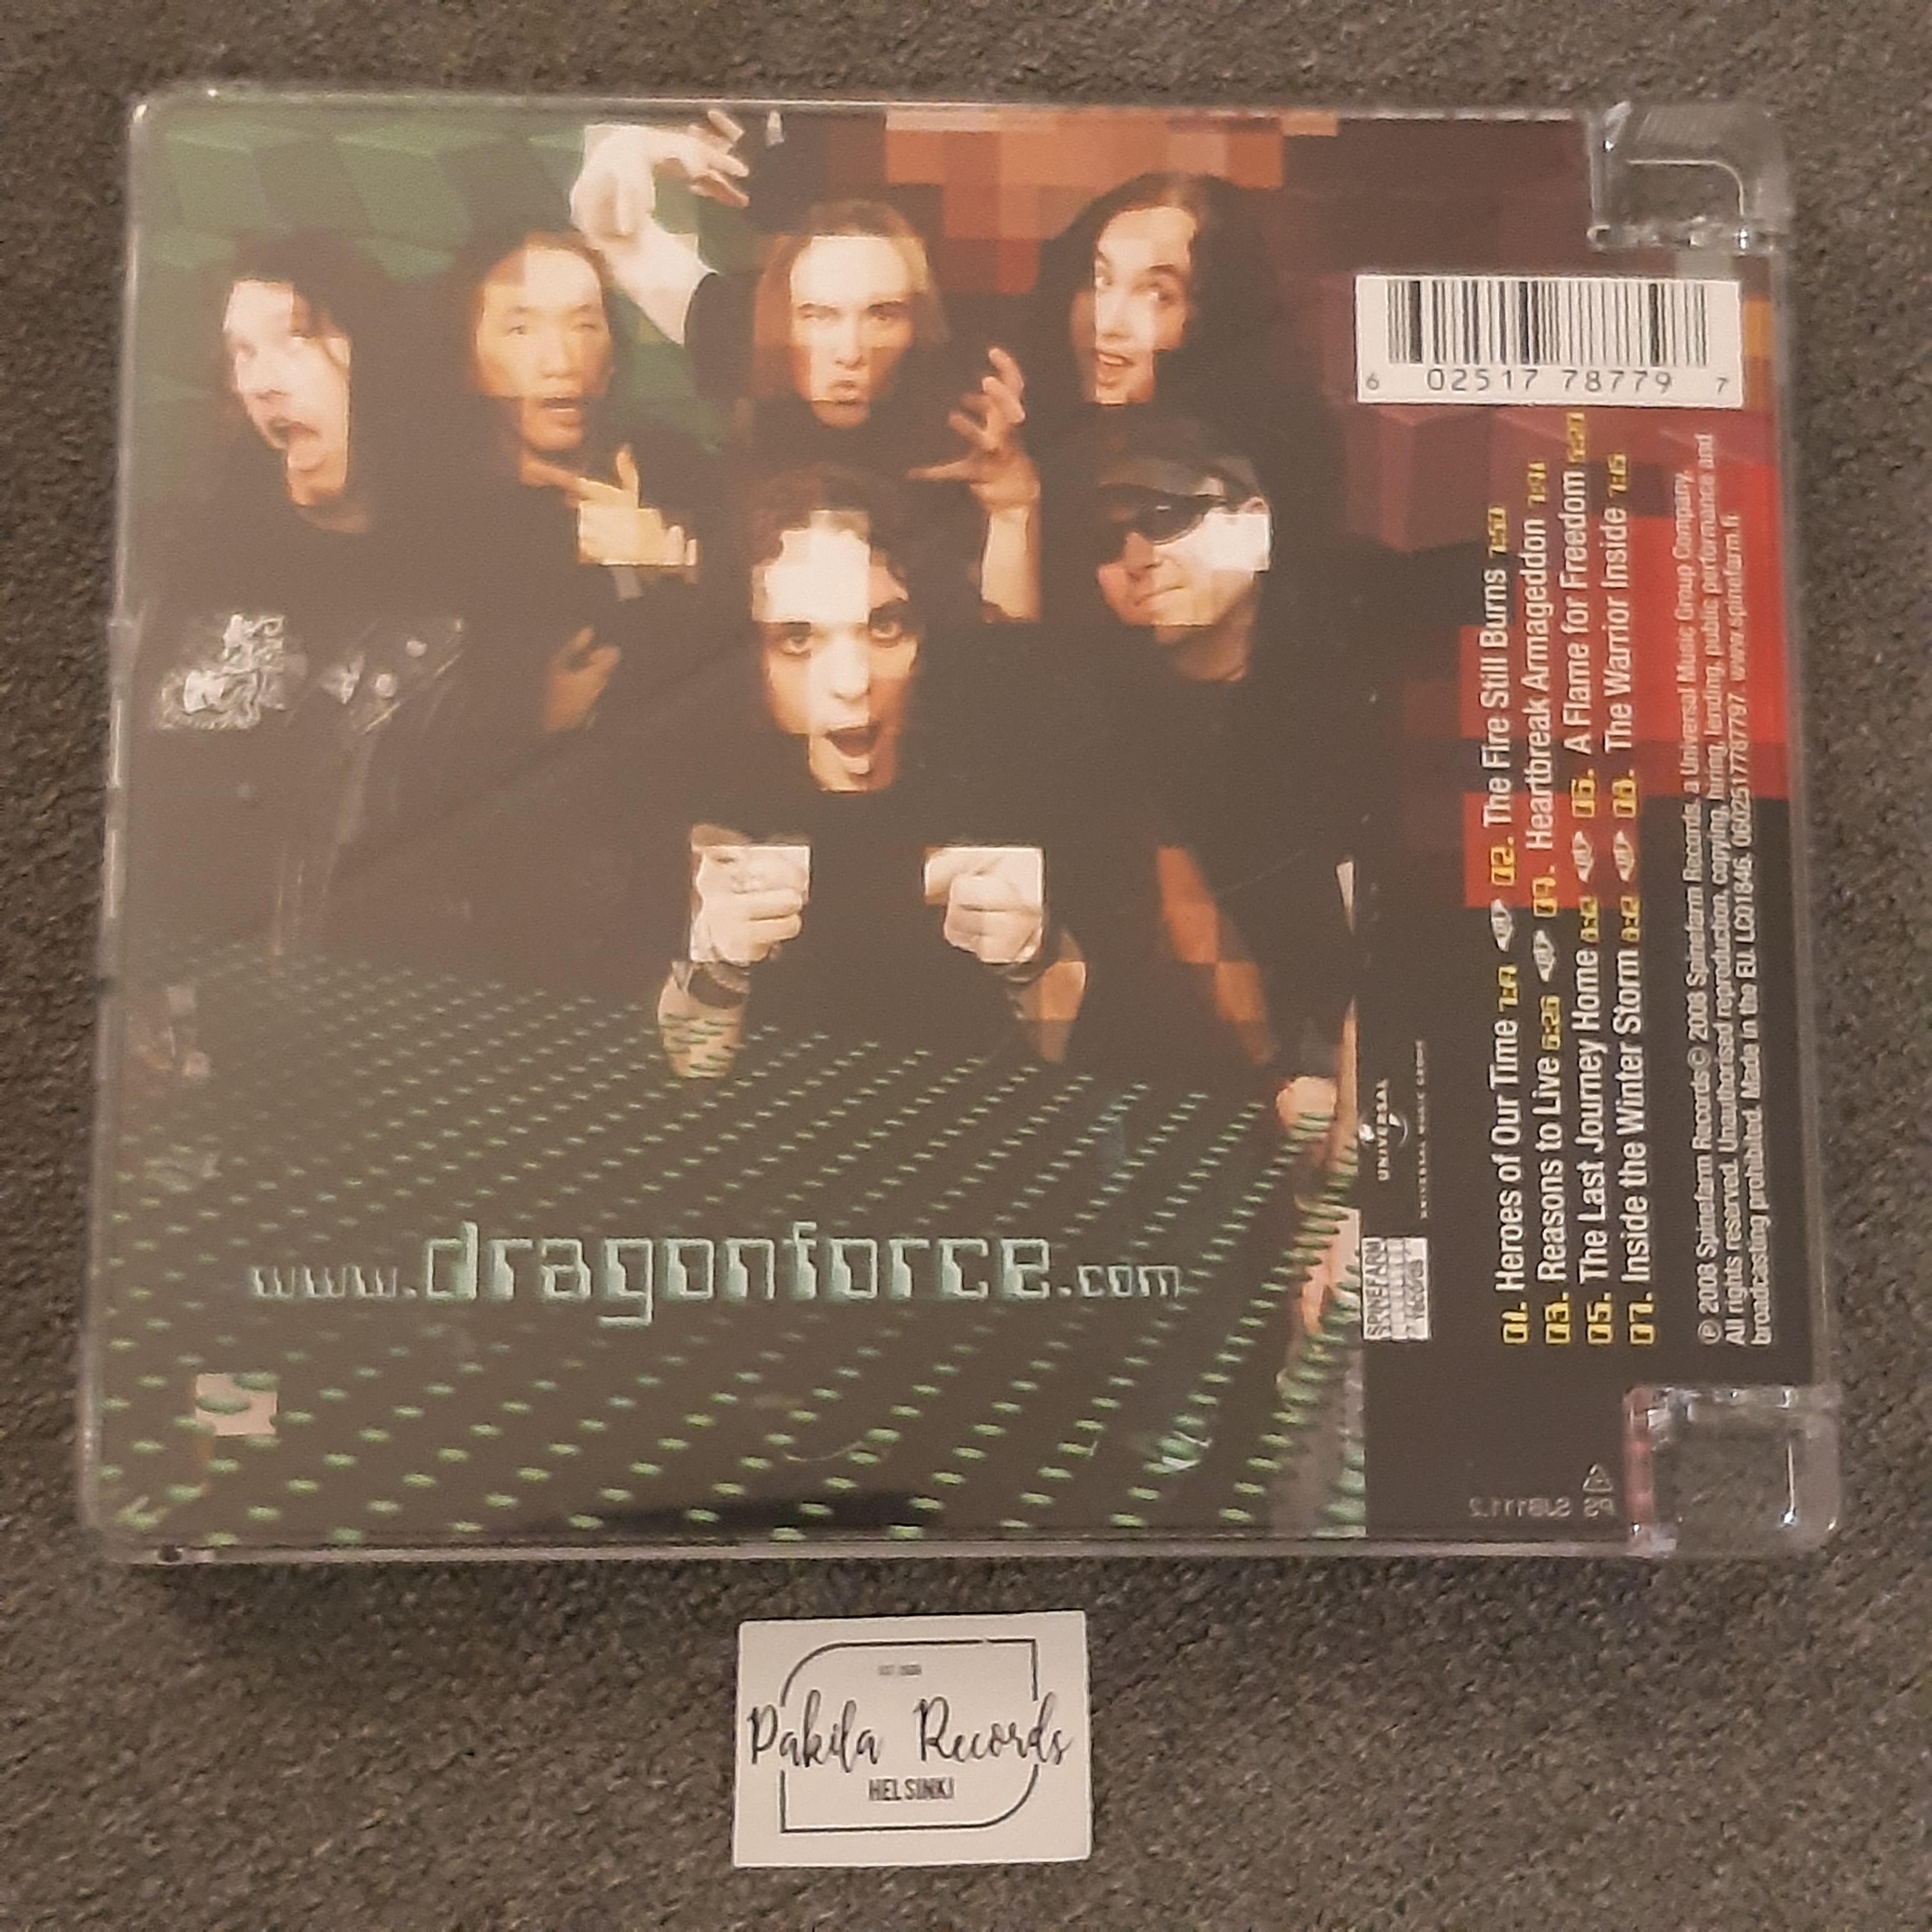 Dragonforce - Ultra Beatdown - CD (käytetty)